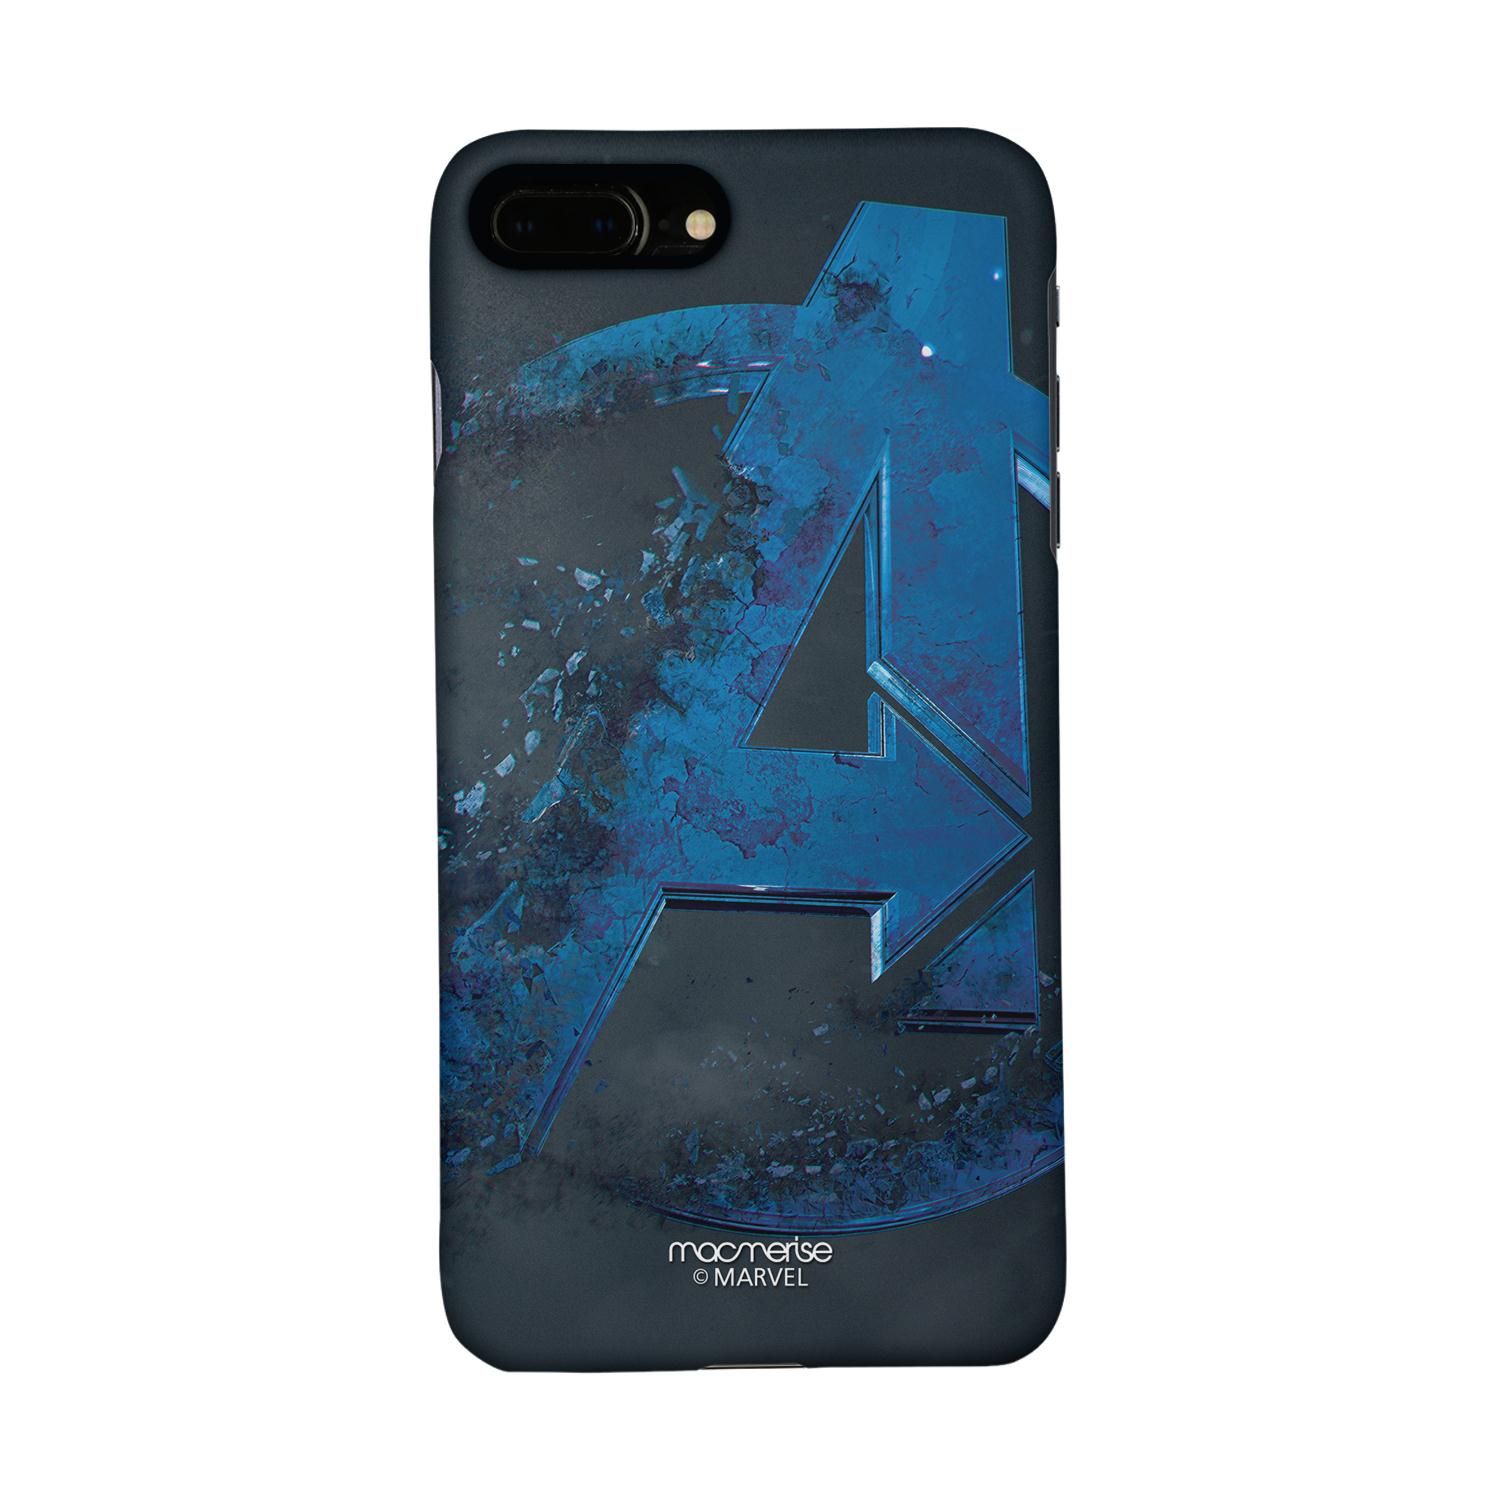 Buy Endgame Logo Teal - Sleek Phone Case for iPhone 7 Plus Online